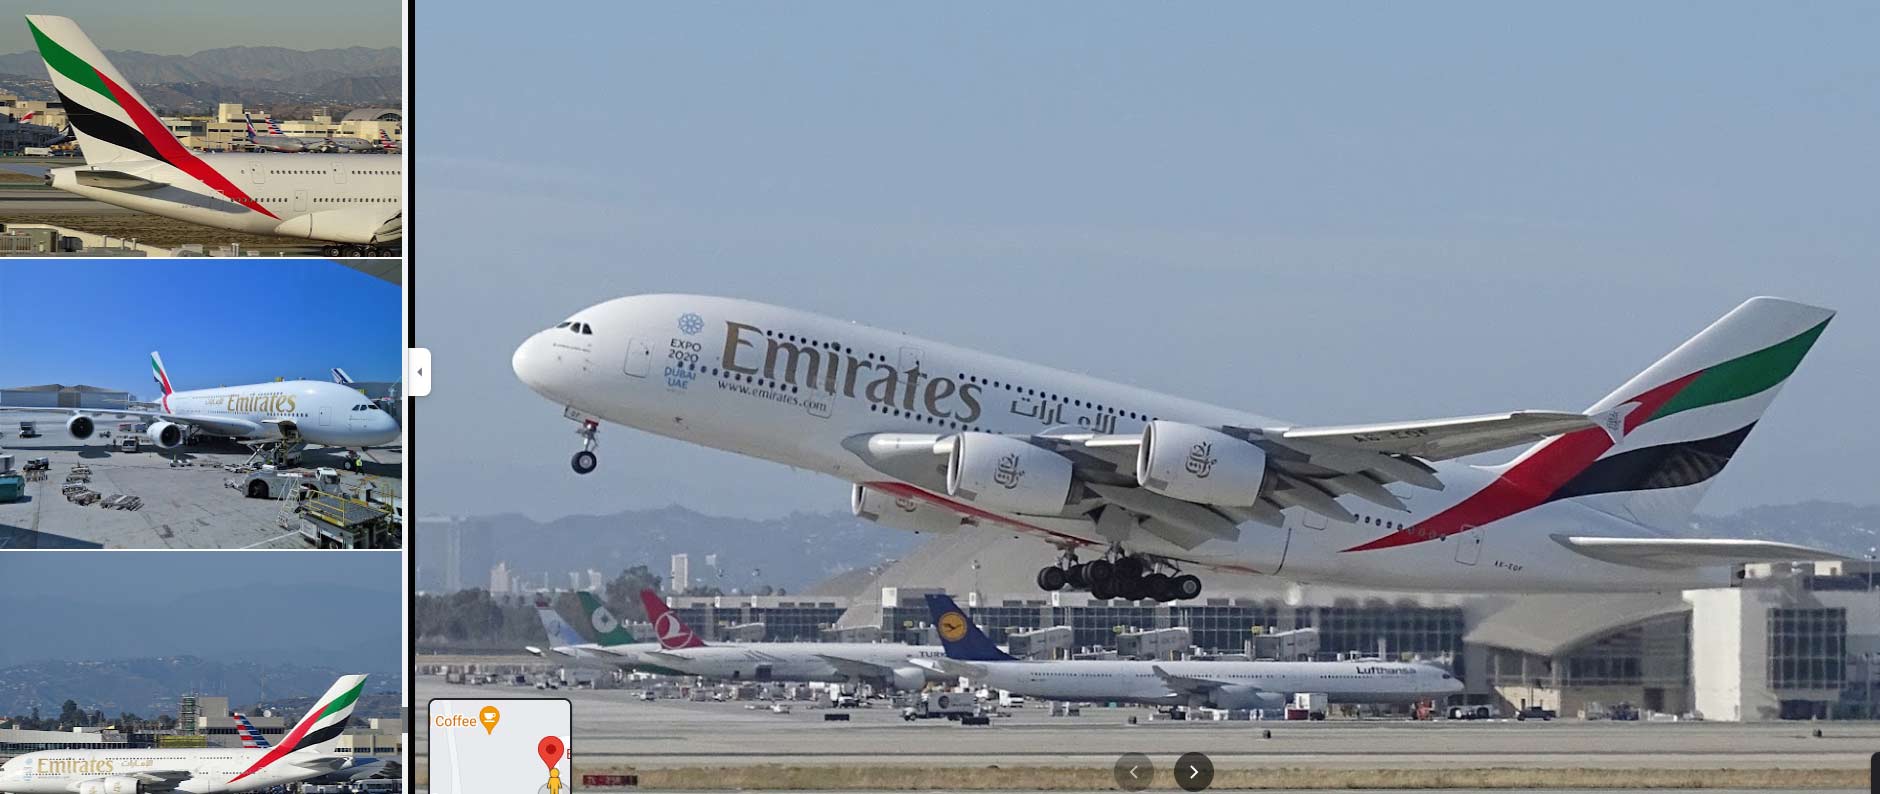 Emirates Airlines lax airport
